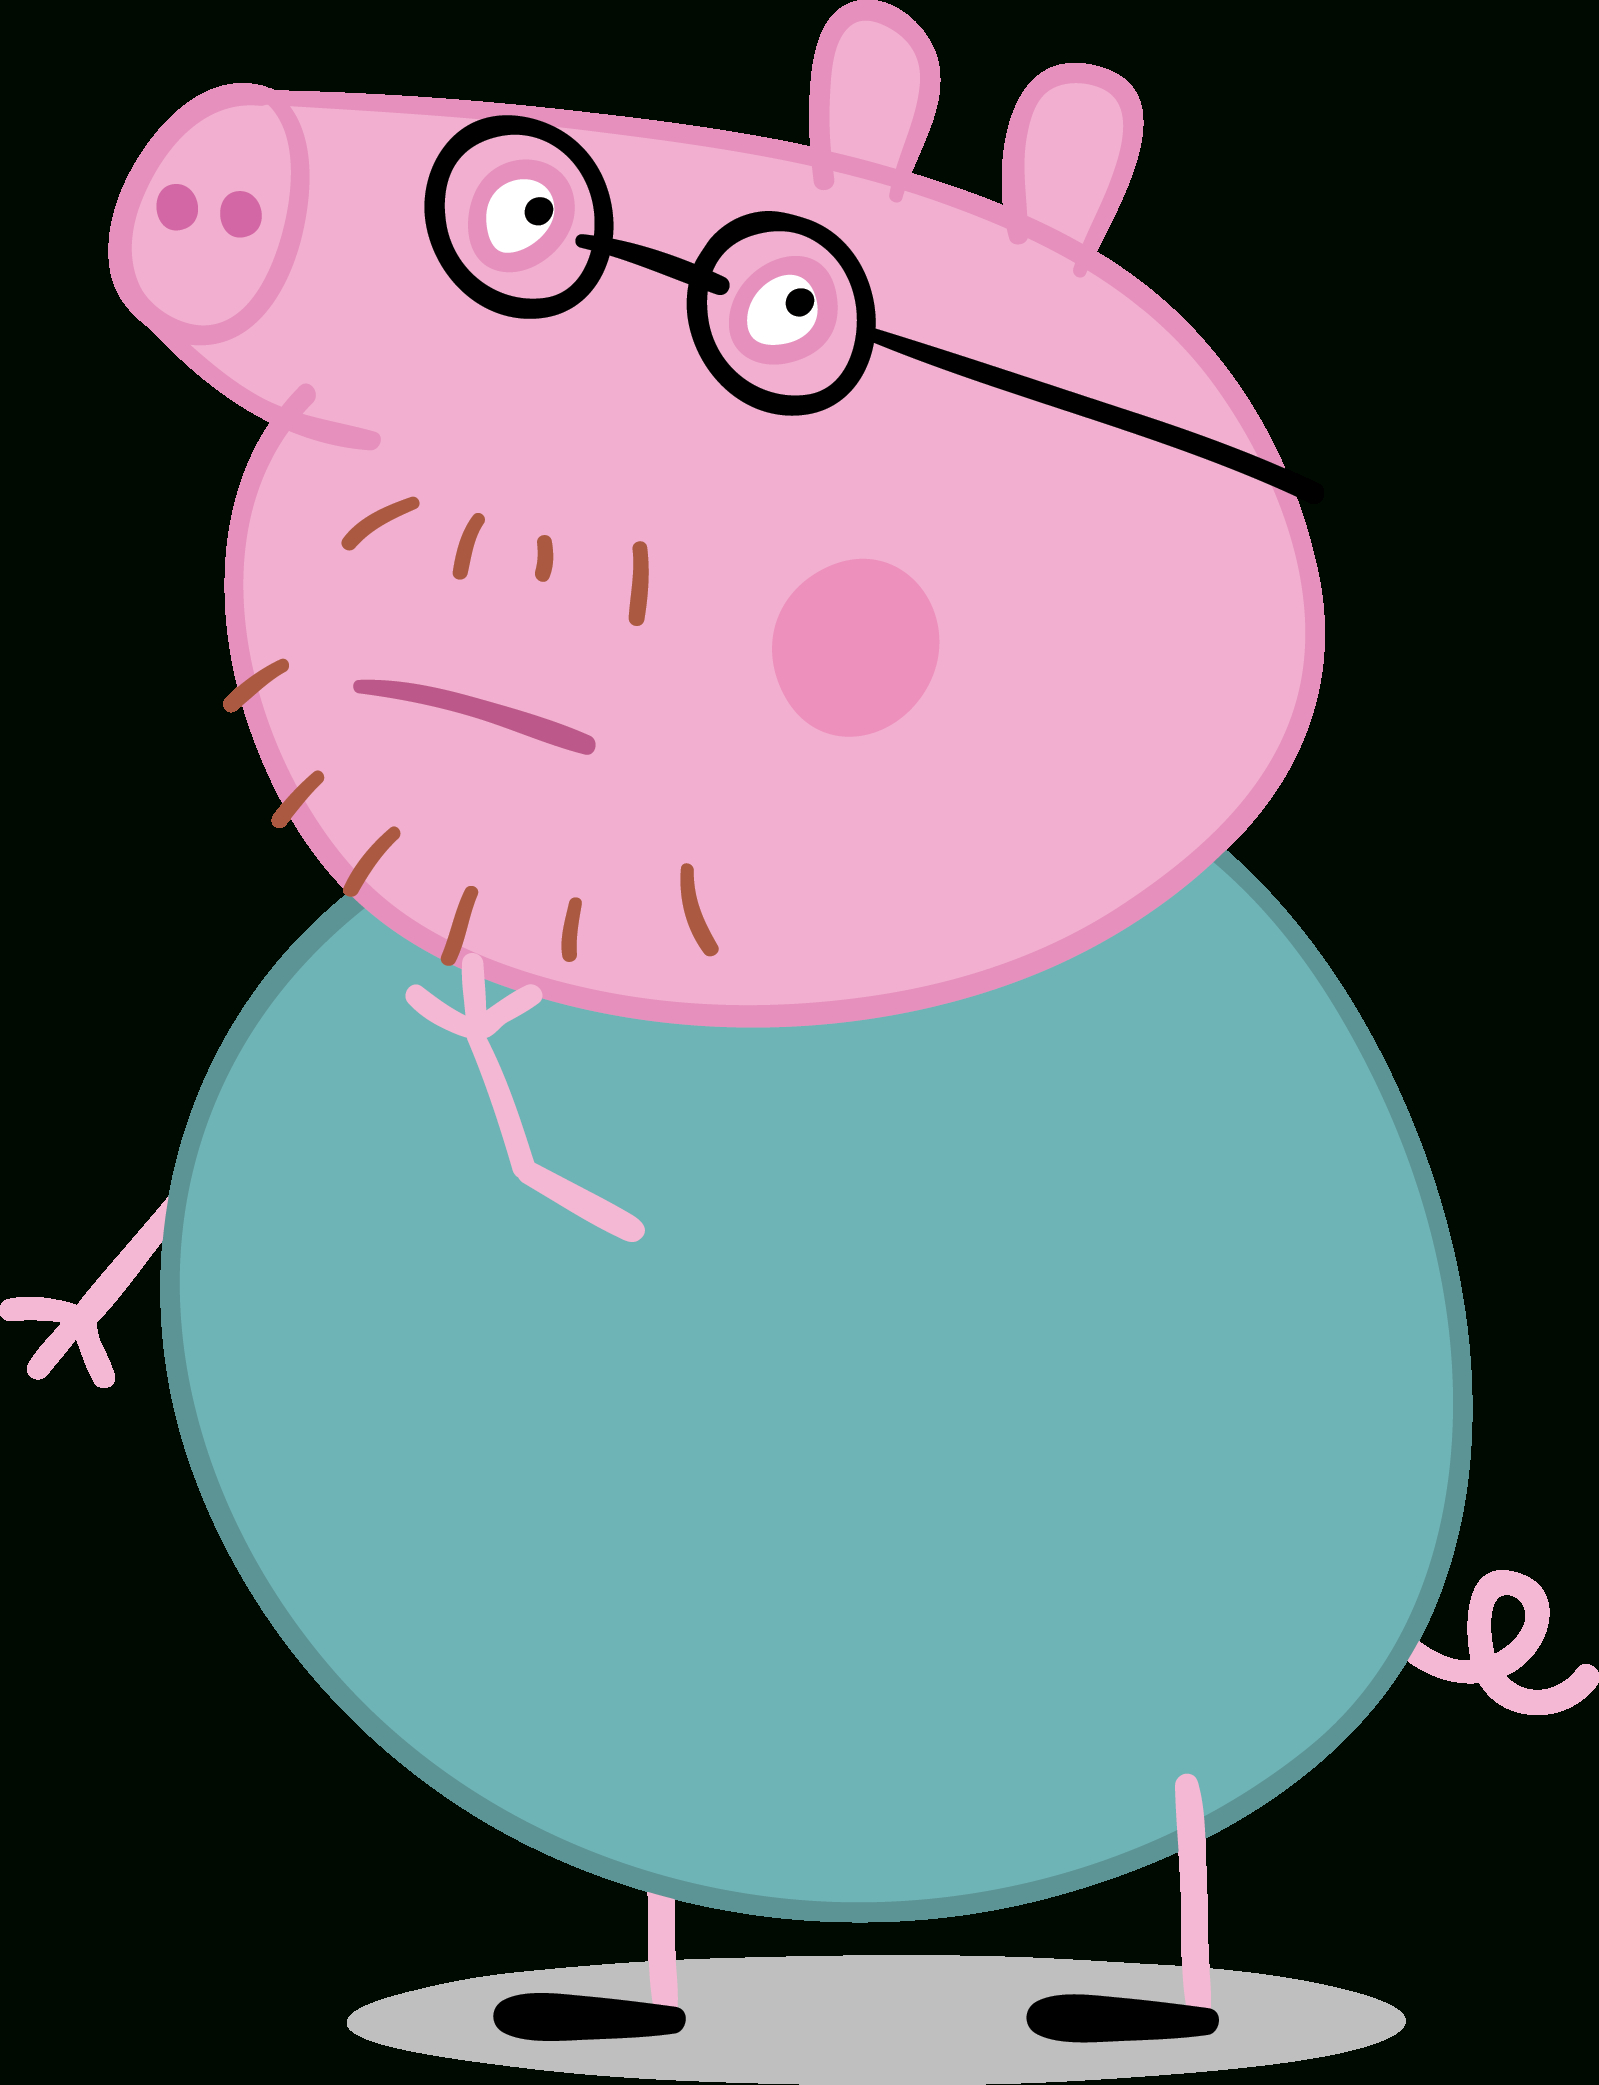 Peppa Pig Partner Toolkit - Peppa Pig Character Free Printable Images